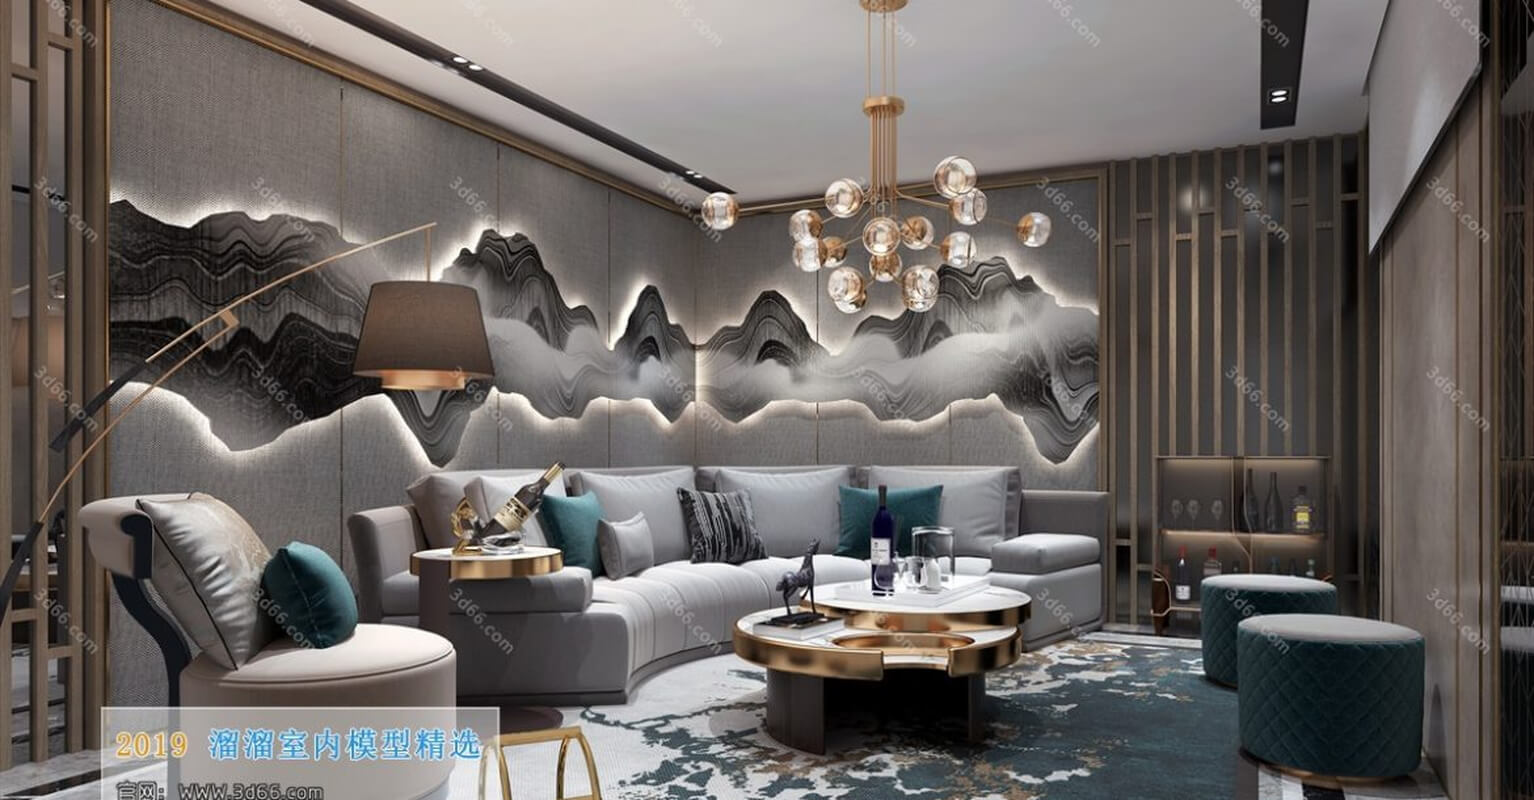 3D66 Club House Interior 2019 Style (05)